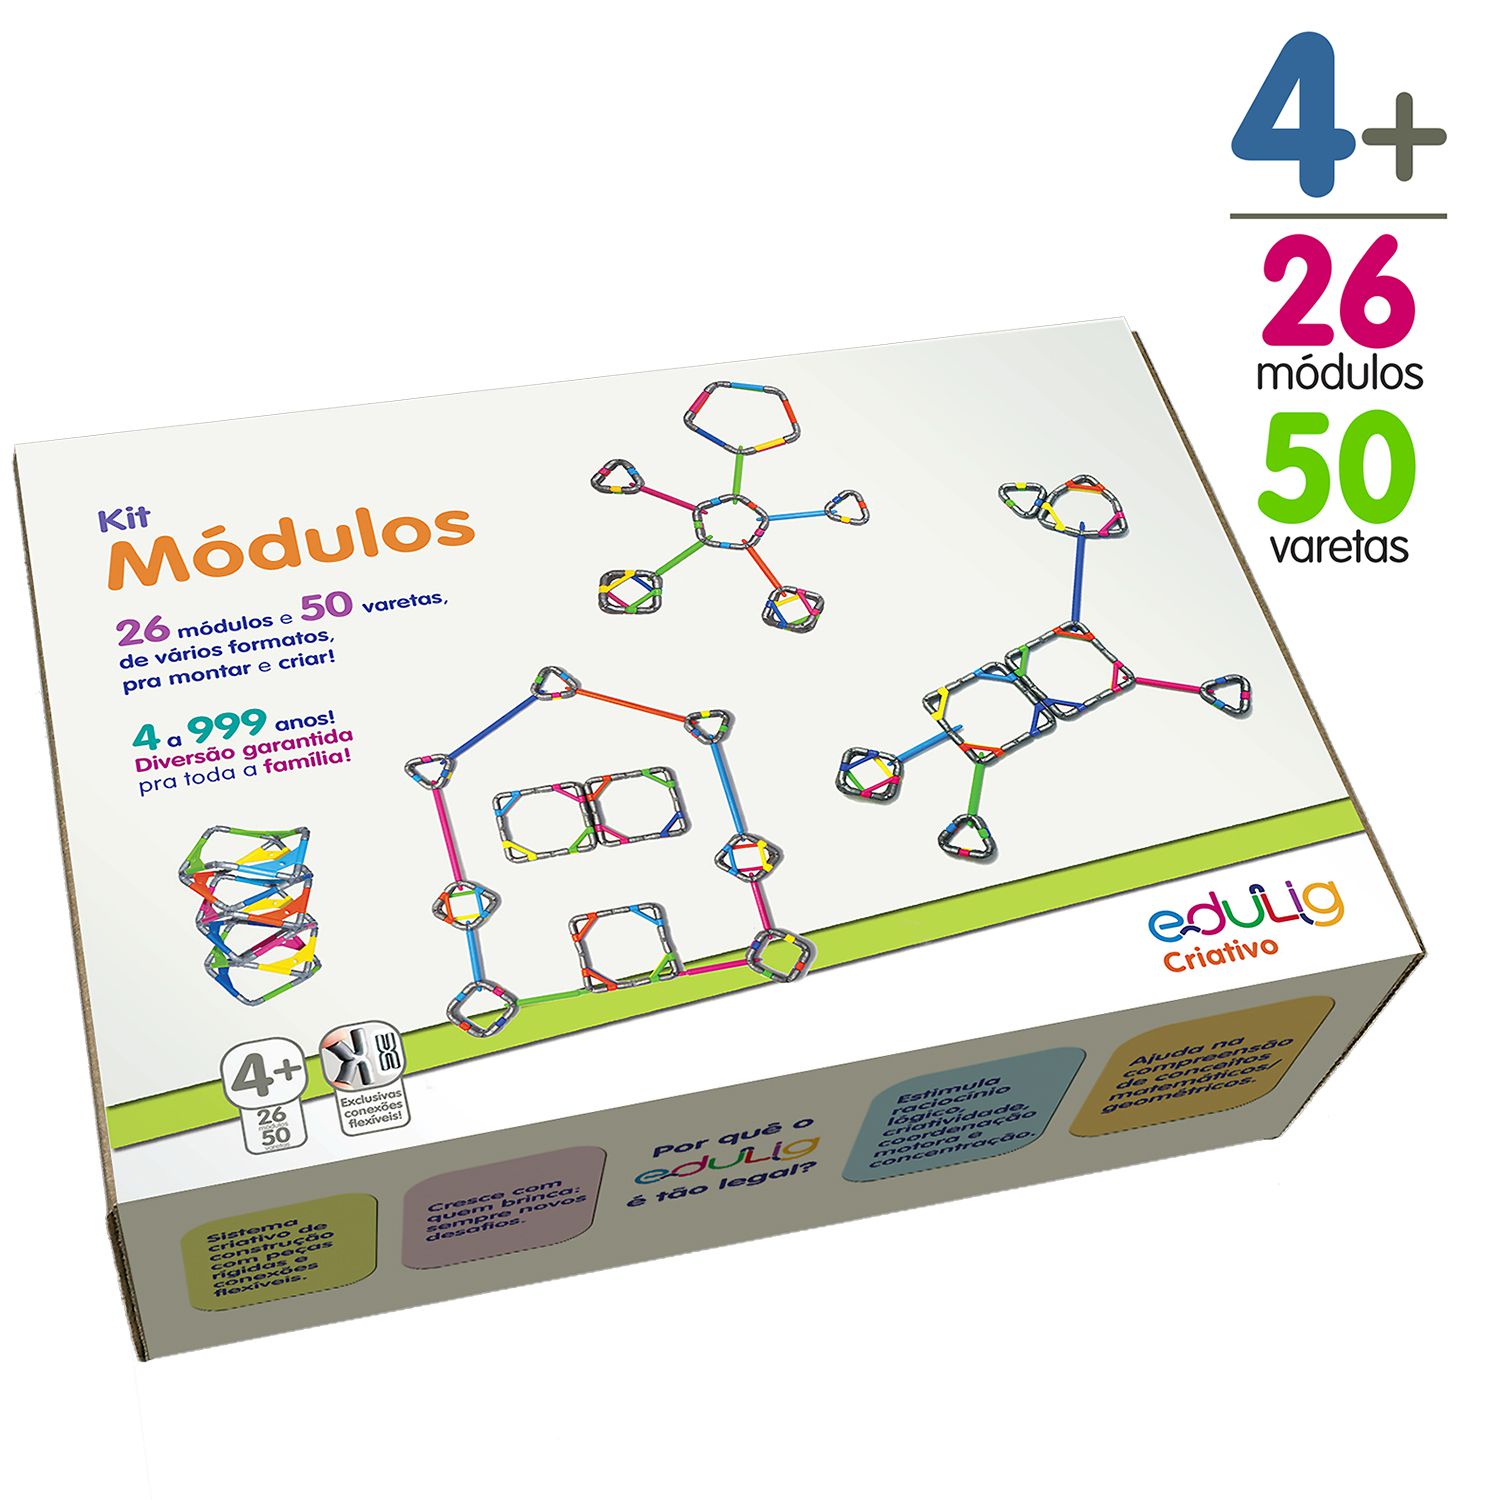 Desafio Edulig Criativo Puzzle 3D - Triângulos e Varetas, Mini Cientista  Brinquedos - Brinquedos Educativos e Criativos